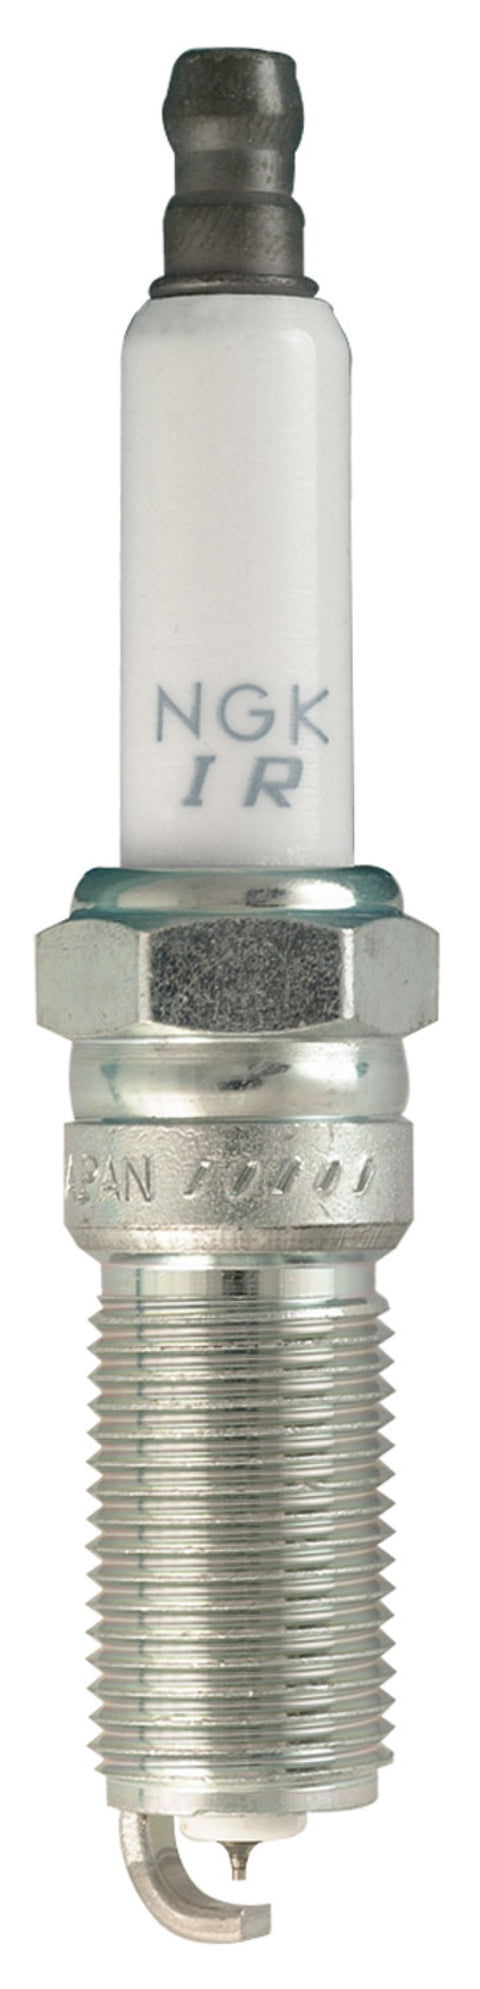 NGK Laser Iridium Spark Plug Box of 4 (LTR6DI-8)